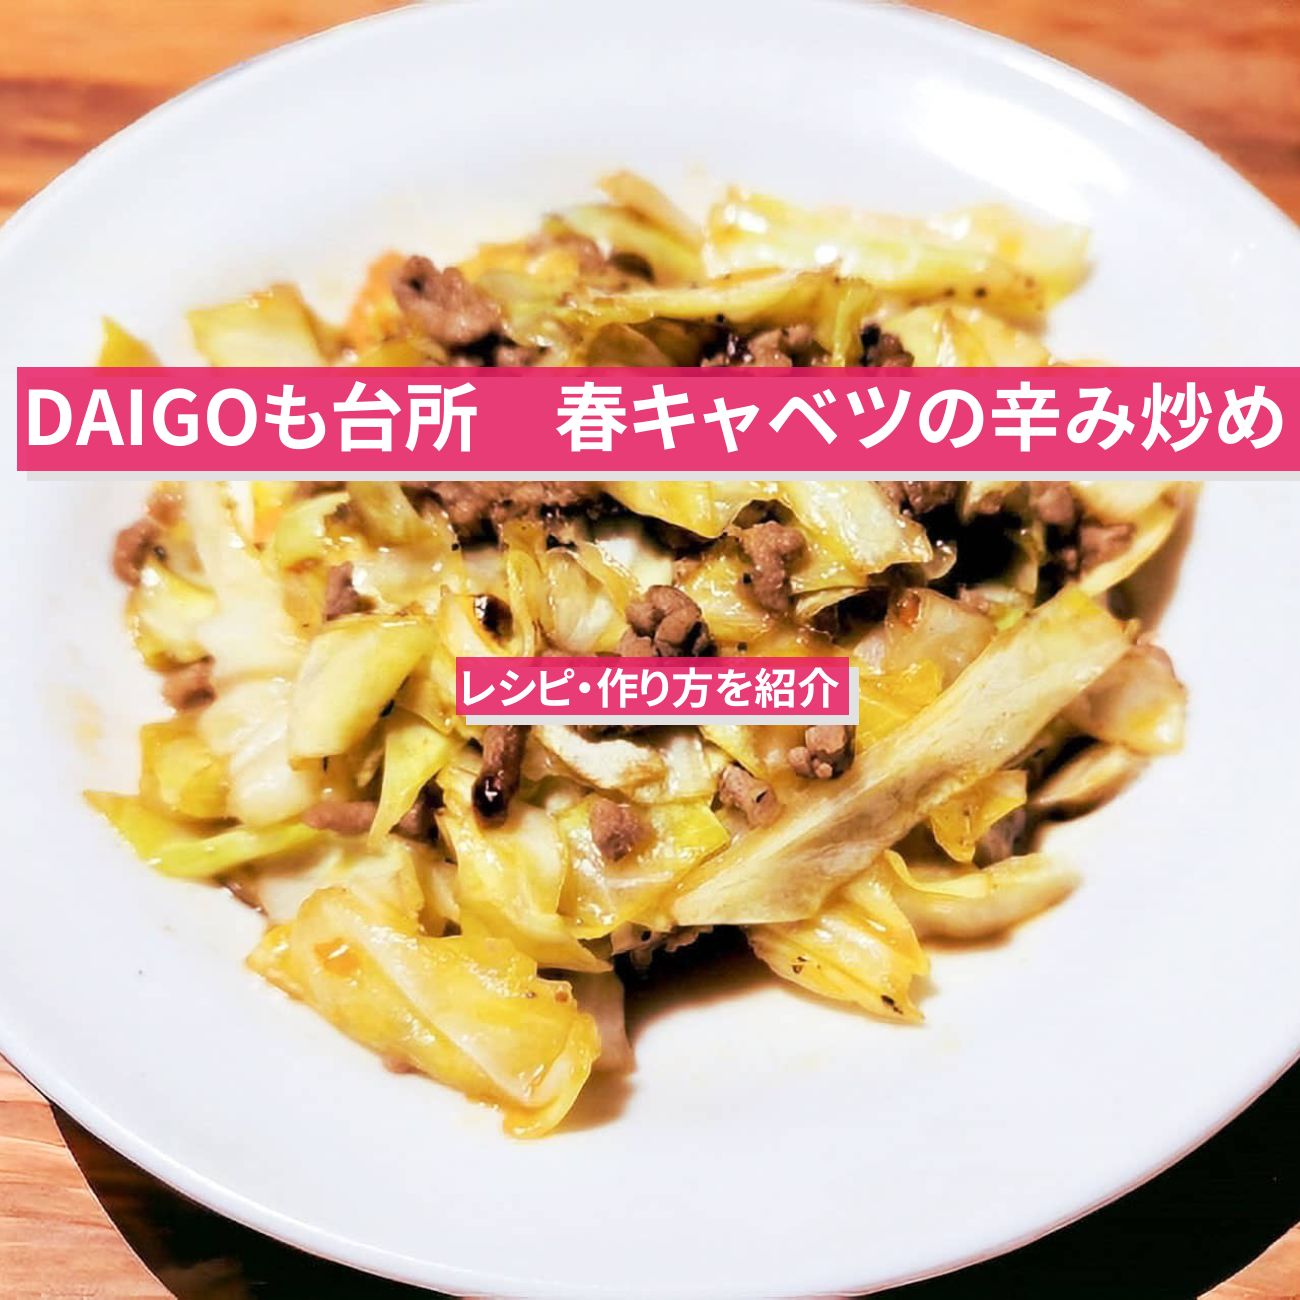 【DAIGOも台所】『春キャベツの辛み炒め』のレシピ・作り方を紹介〔ダイゴも台所〕